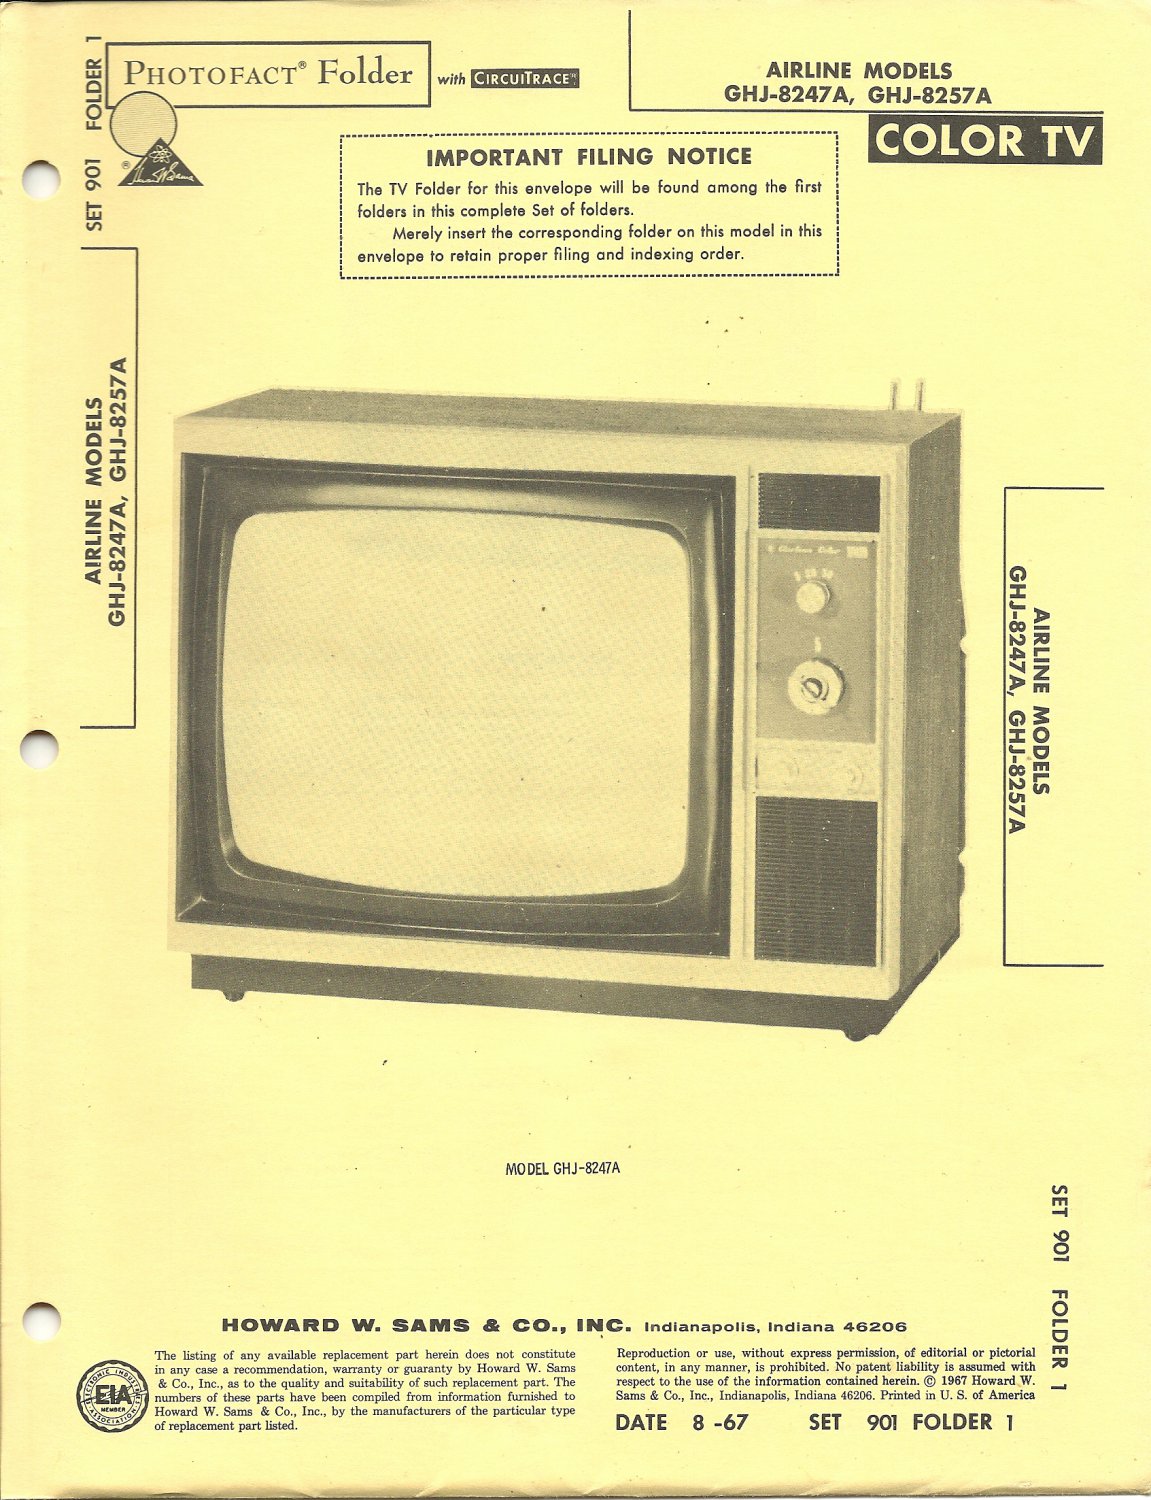 SAMS Photofact - Set 901 - Folder 1 - Aug 1967 - AIRLINE MODELS GHJ-8247A, GHJ-8257A